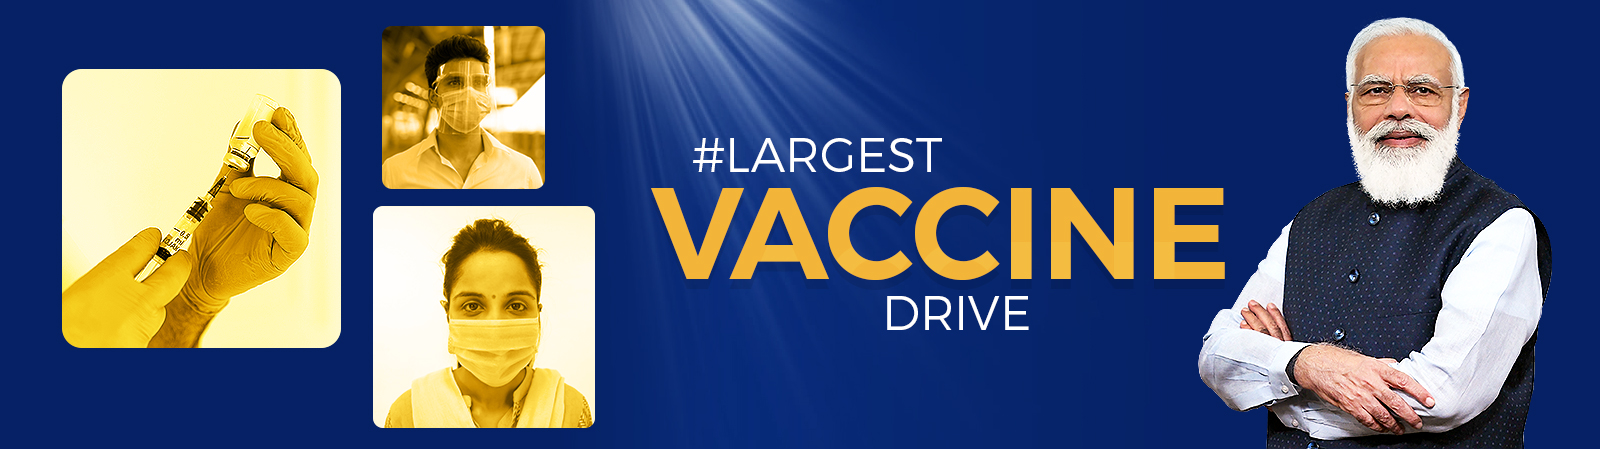 largest vaccine drive